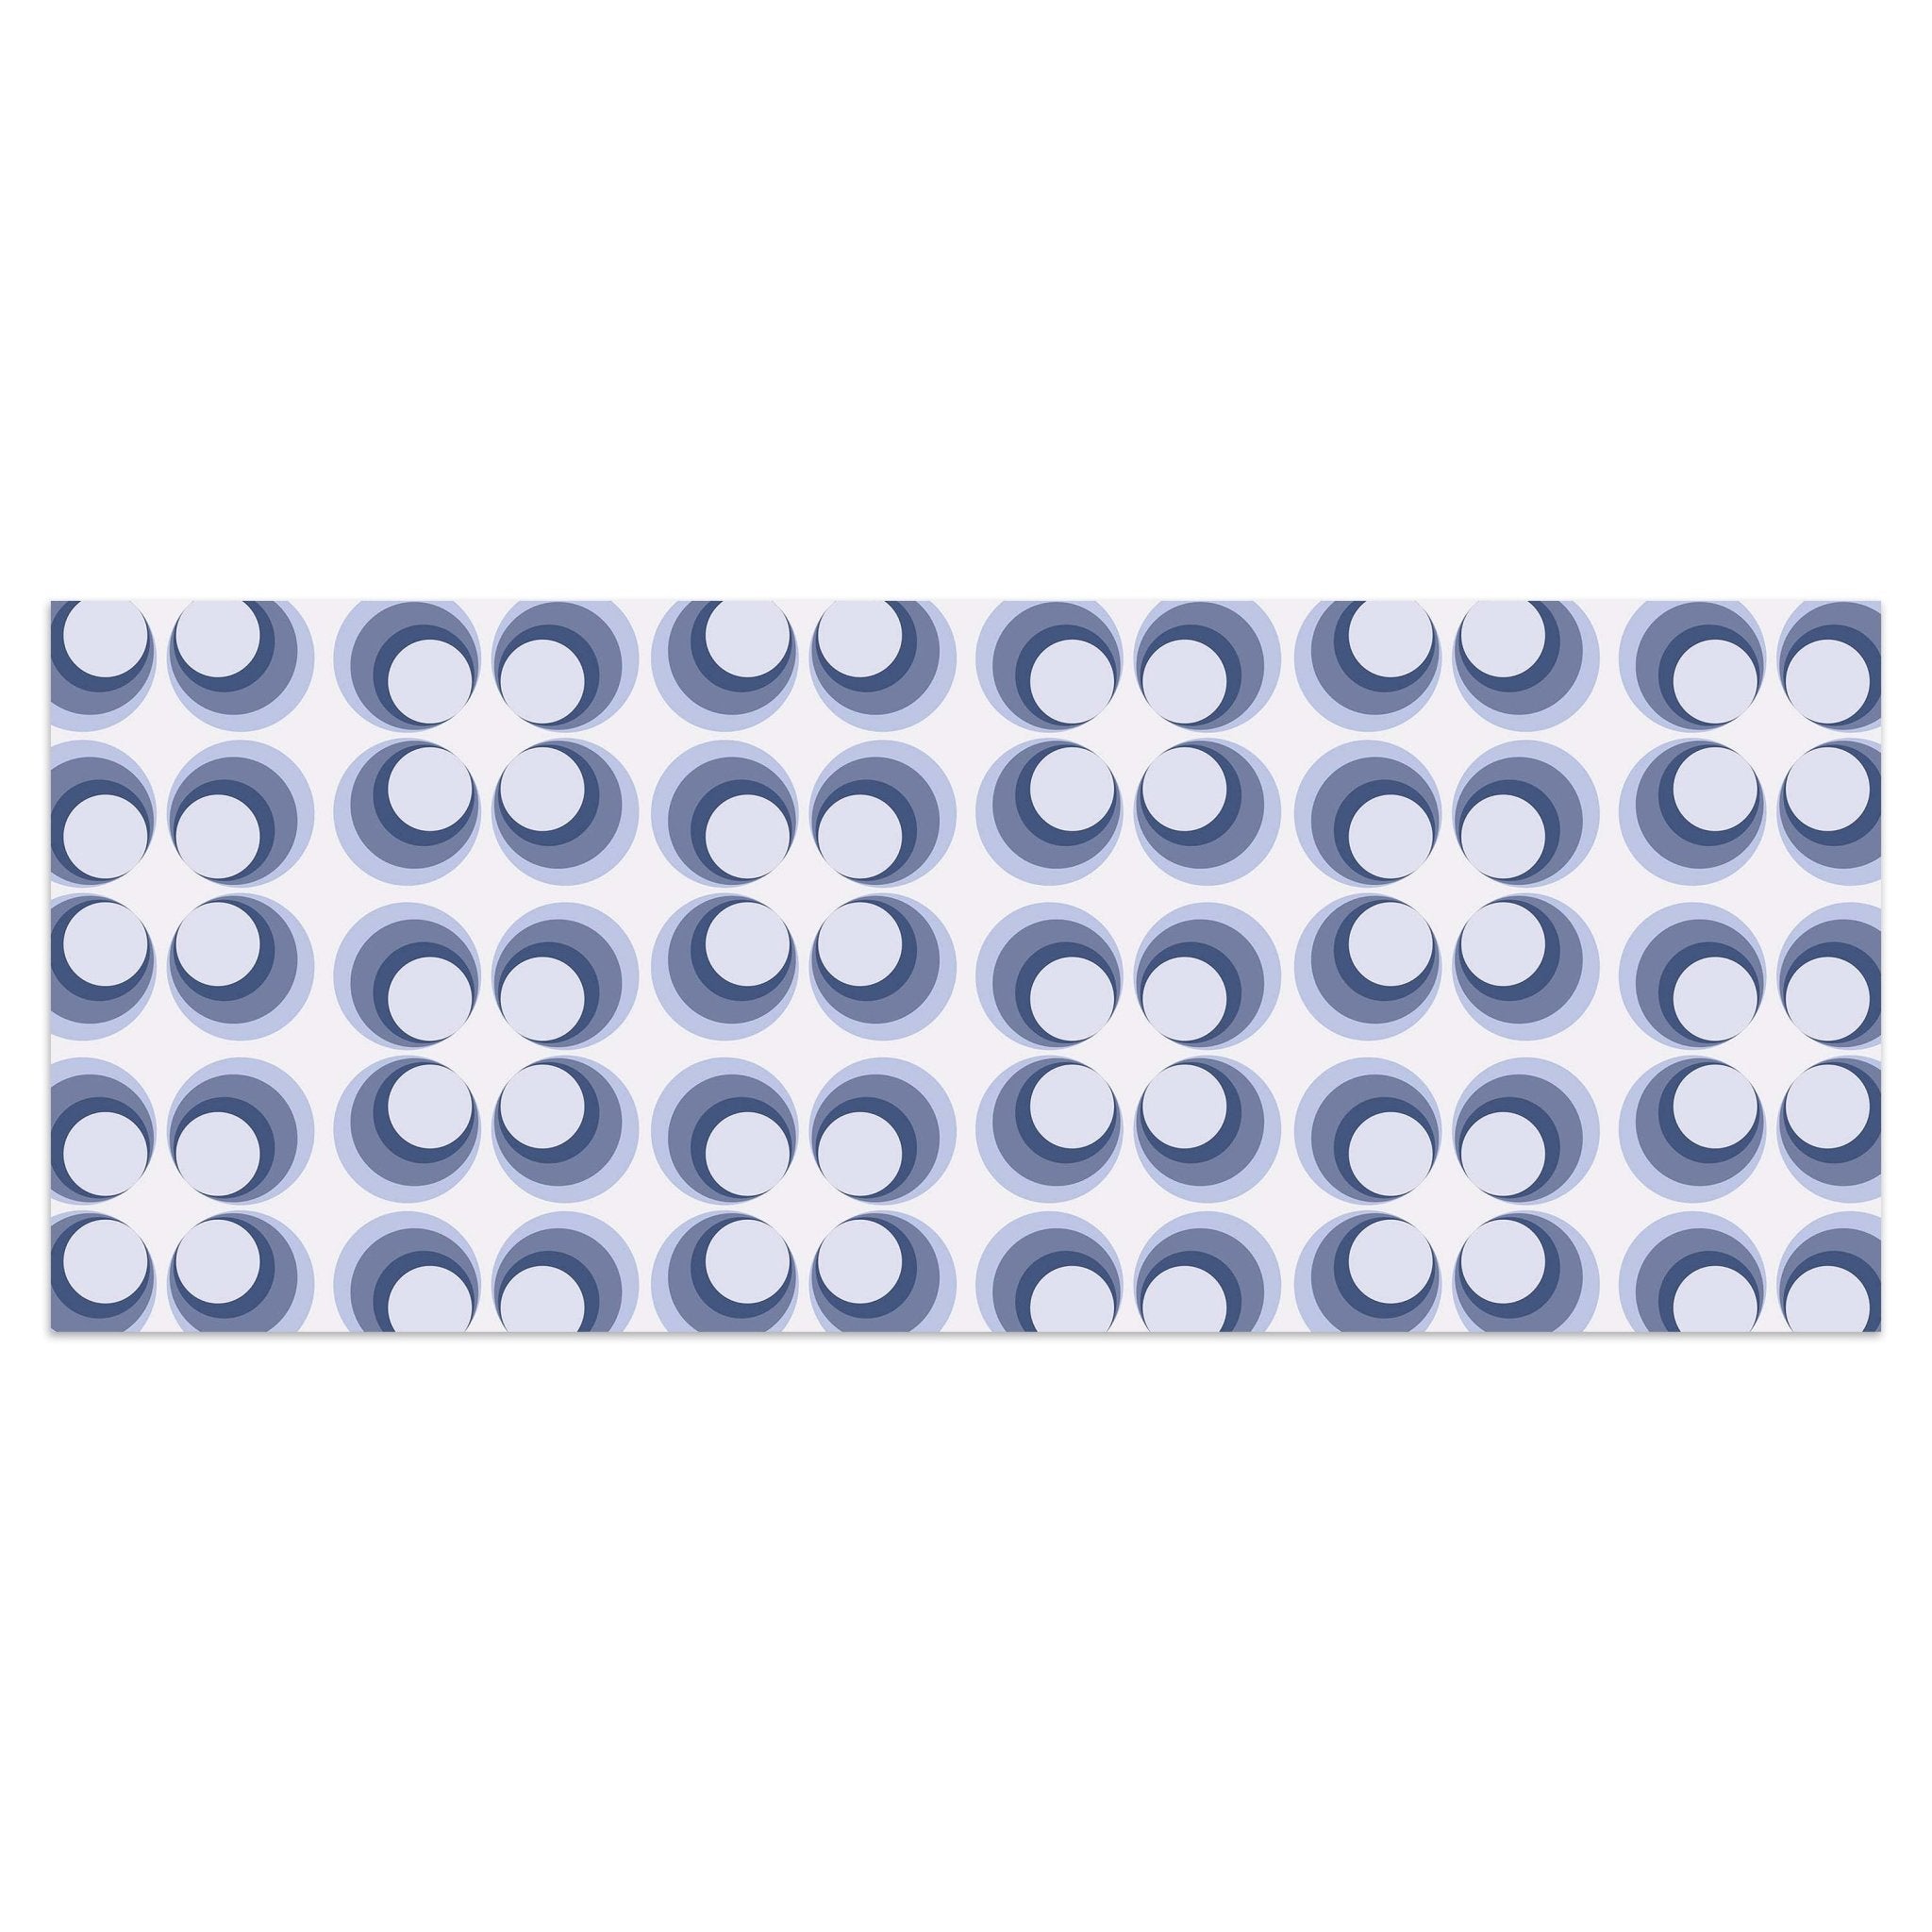 Leinwandbild Retrokreise Blau Muster M0099 kaufen - Bild 1